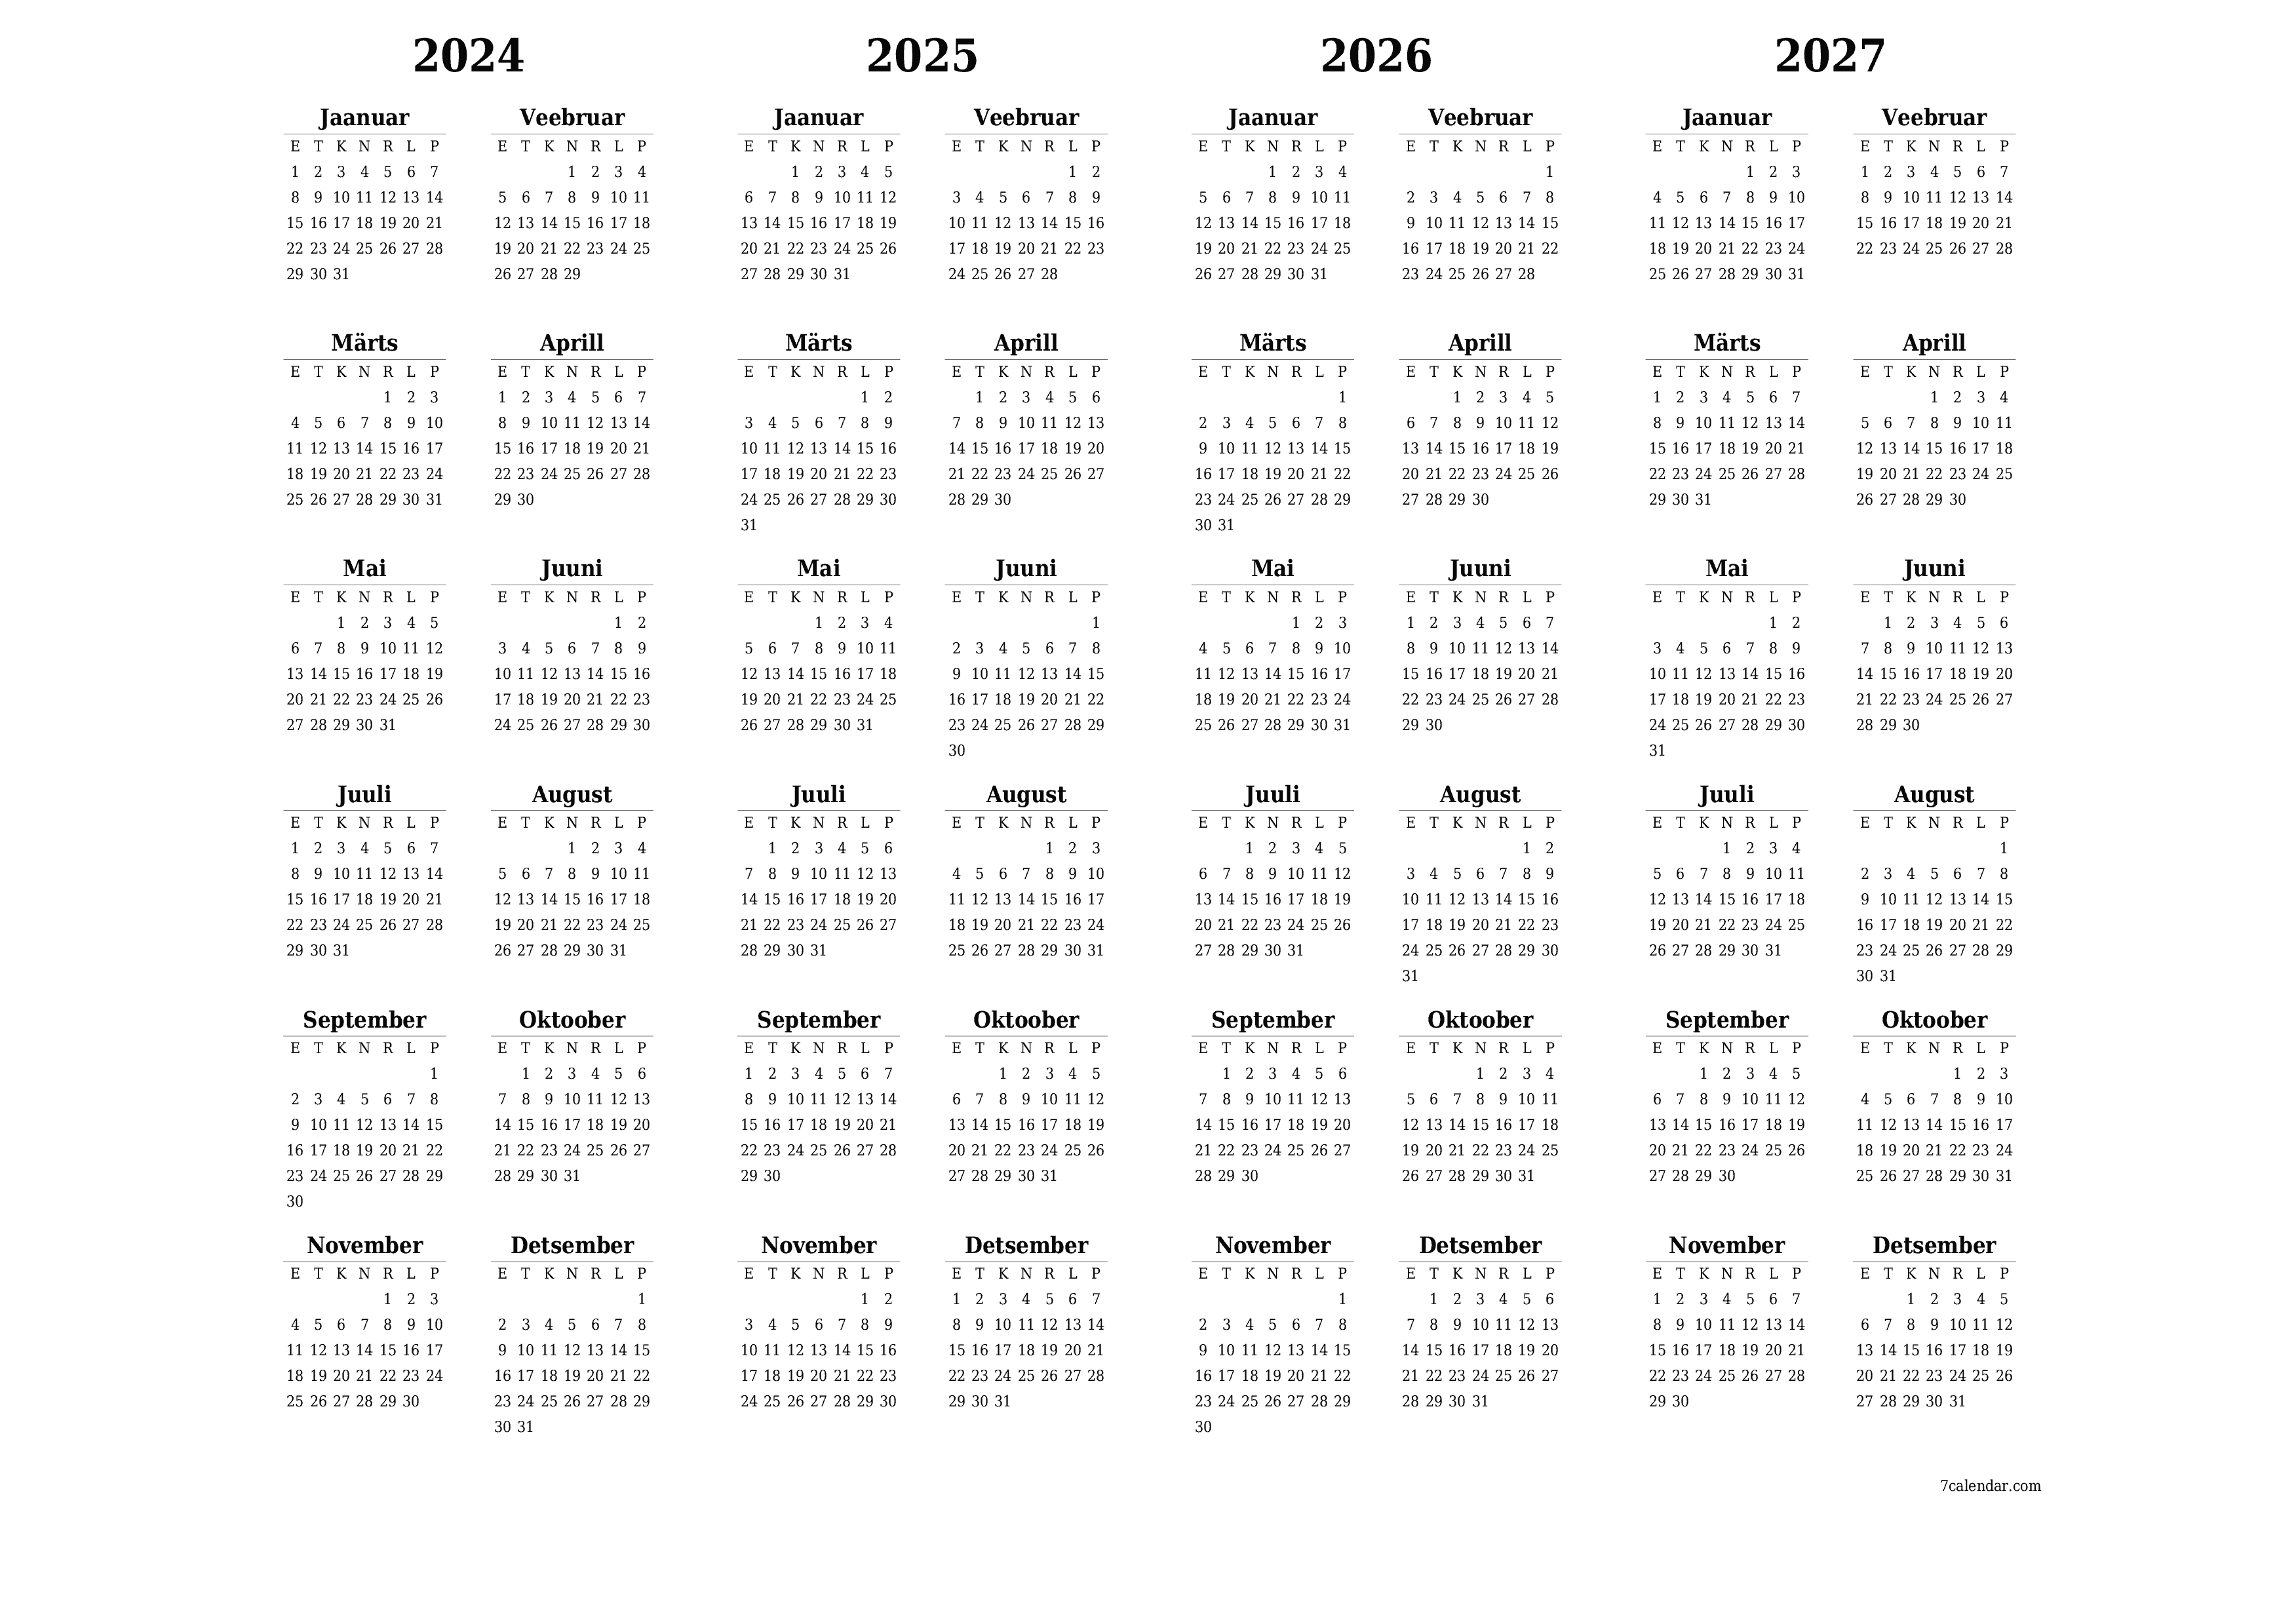 prinditav seina kalendri mall tasuta horisontaalne Iga-aastane kalender Detsember (Dets) 2024